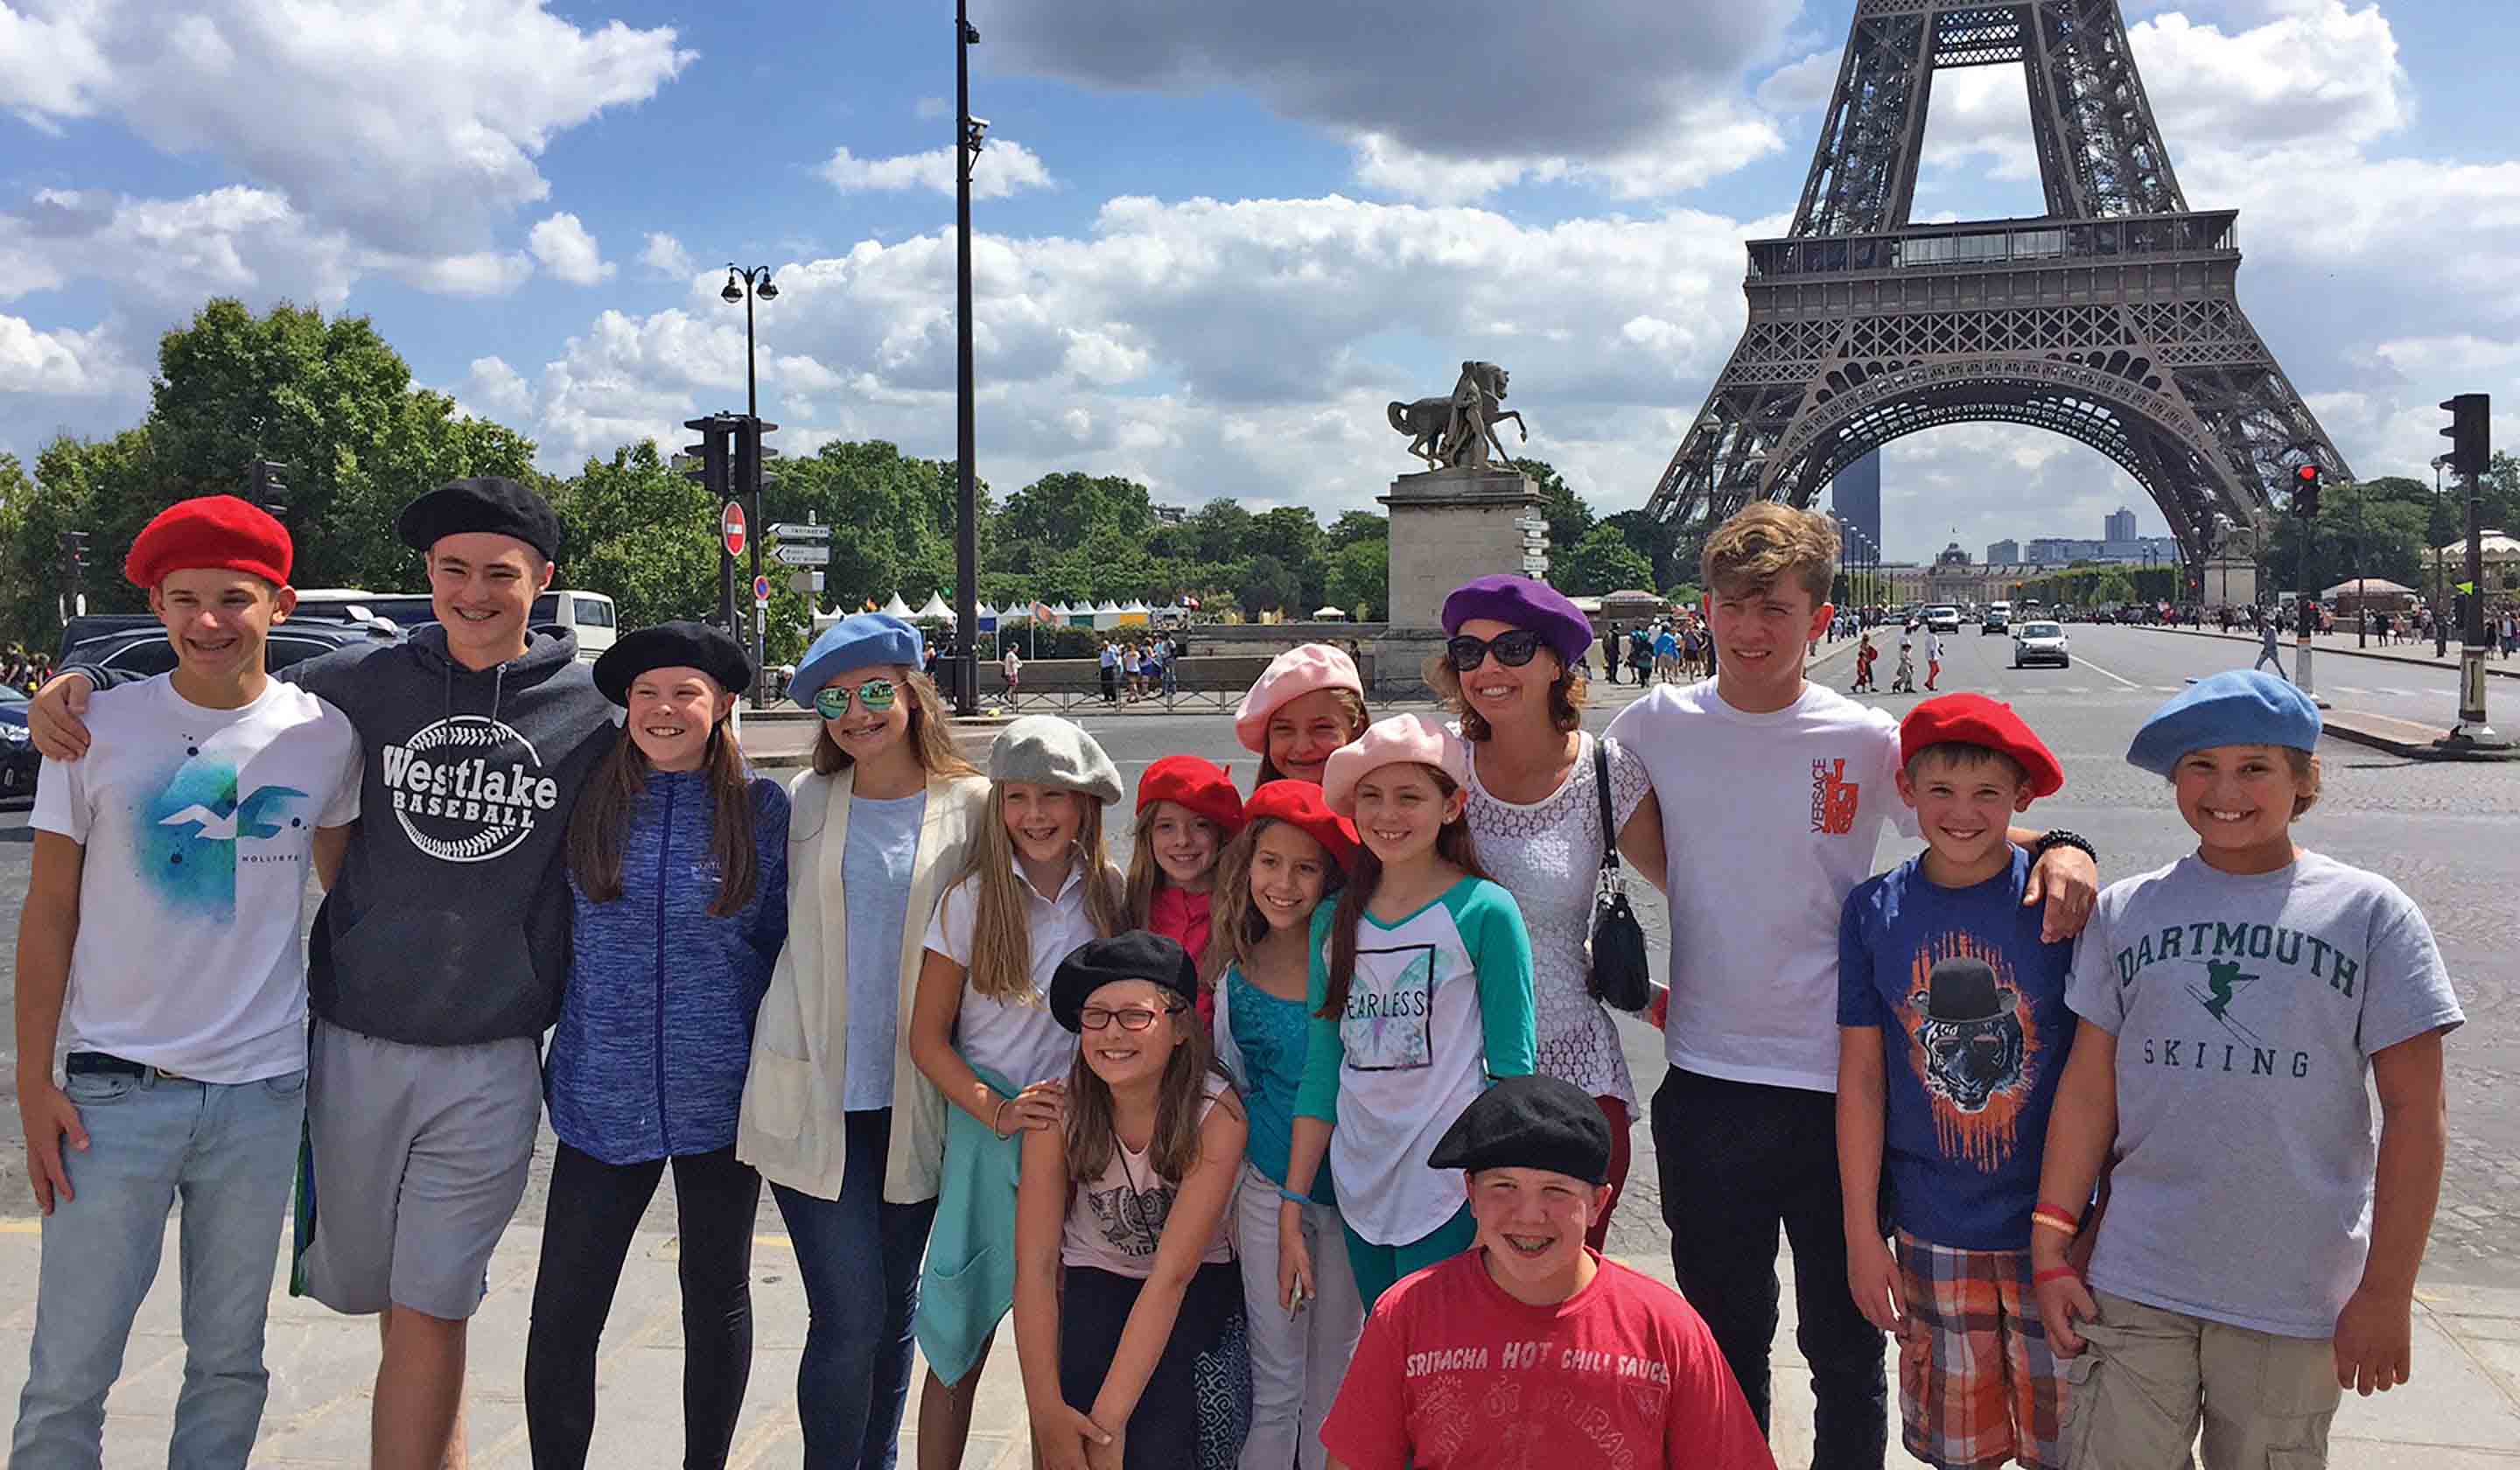 Family Fun Along The Seine: Paris To Normandy